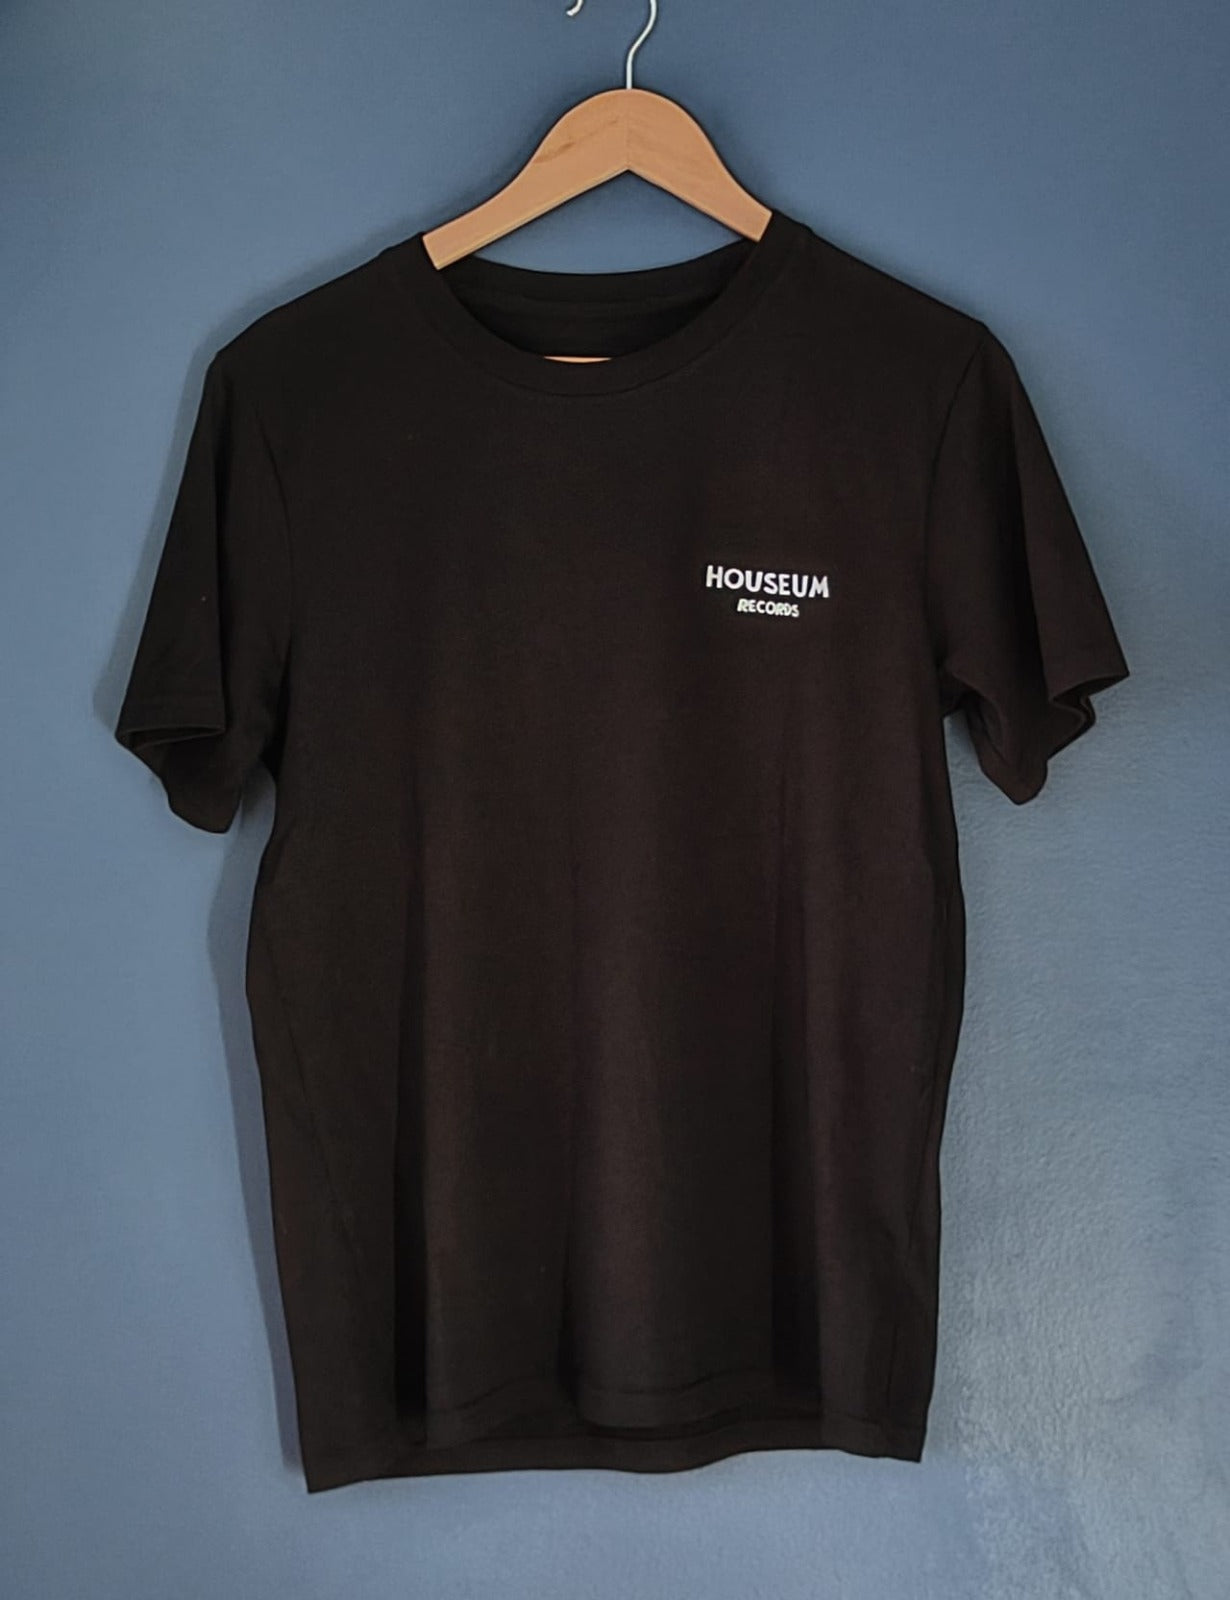 Houseum Records Black T-Shirt